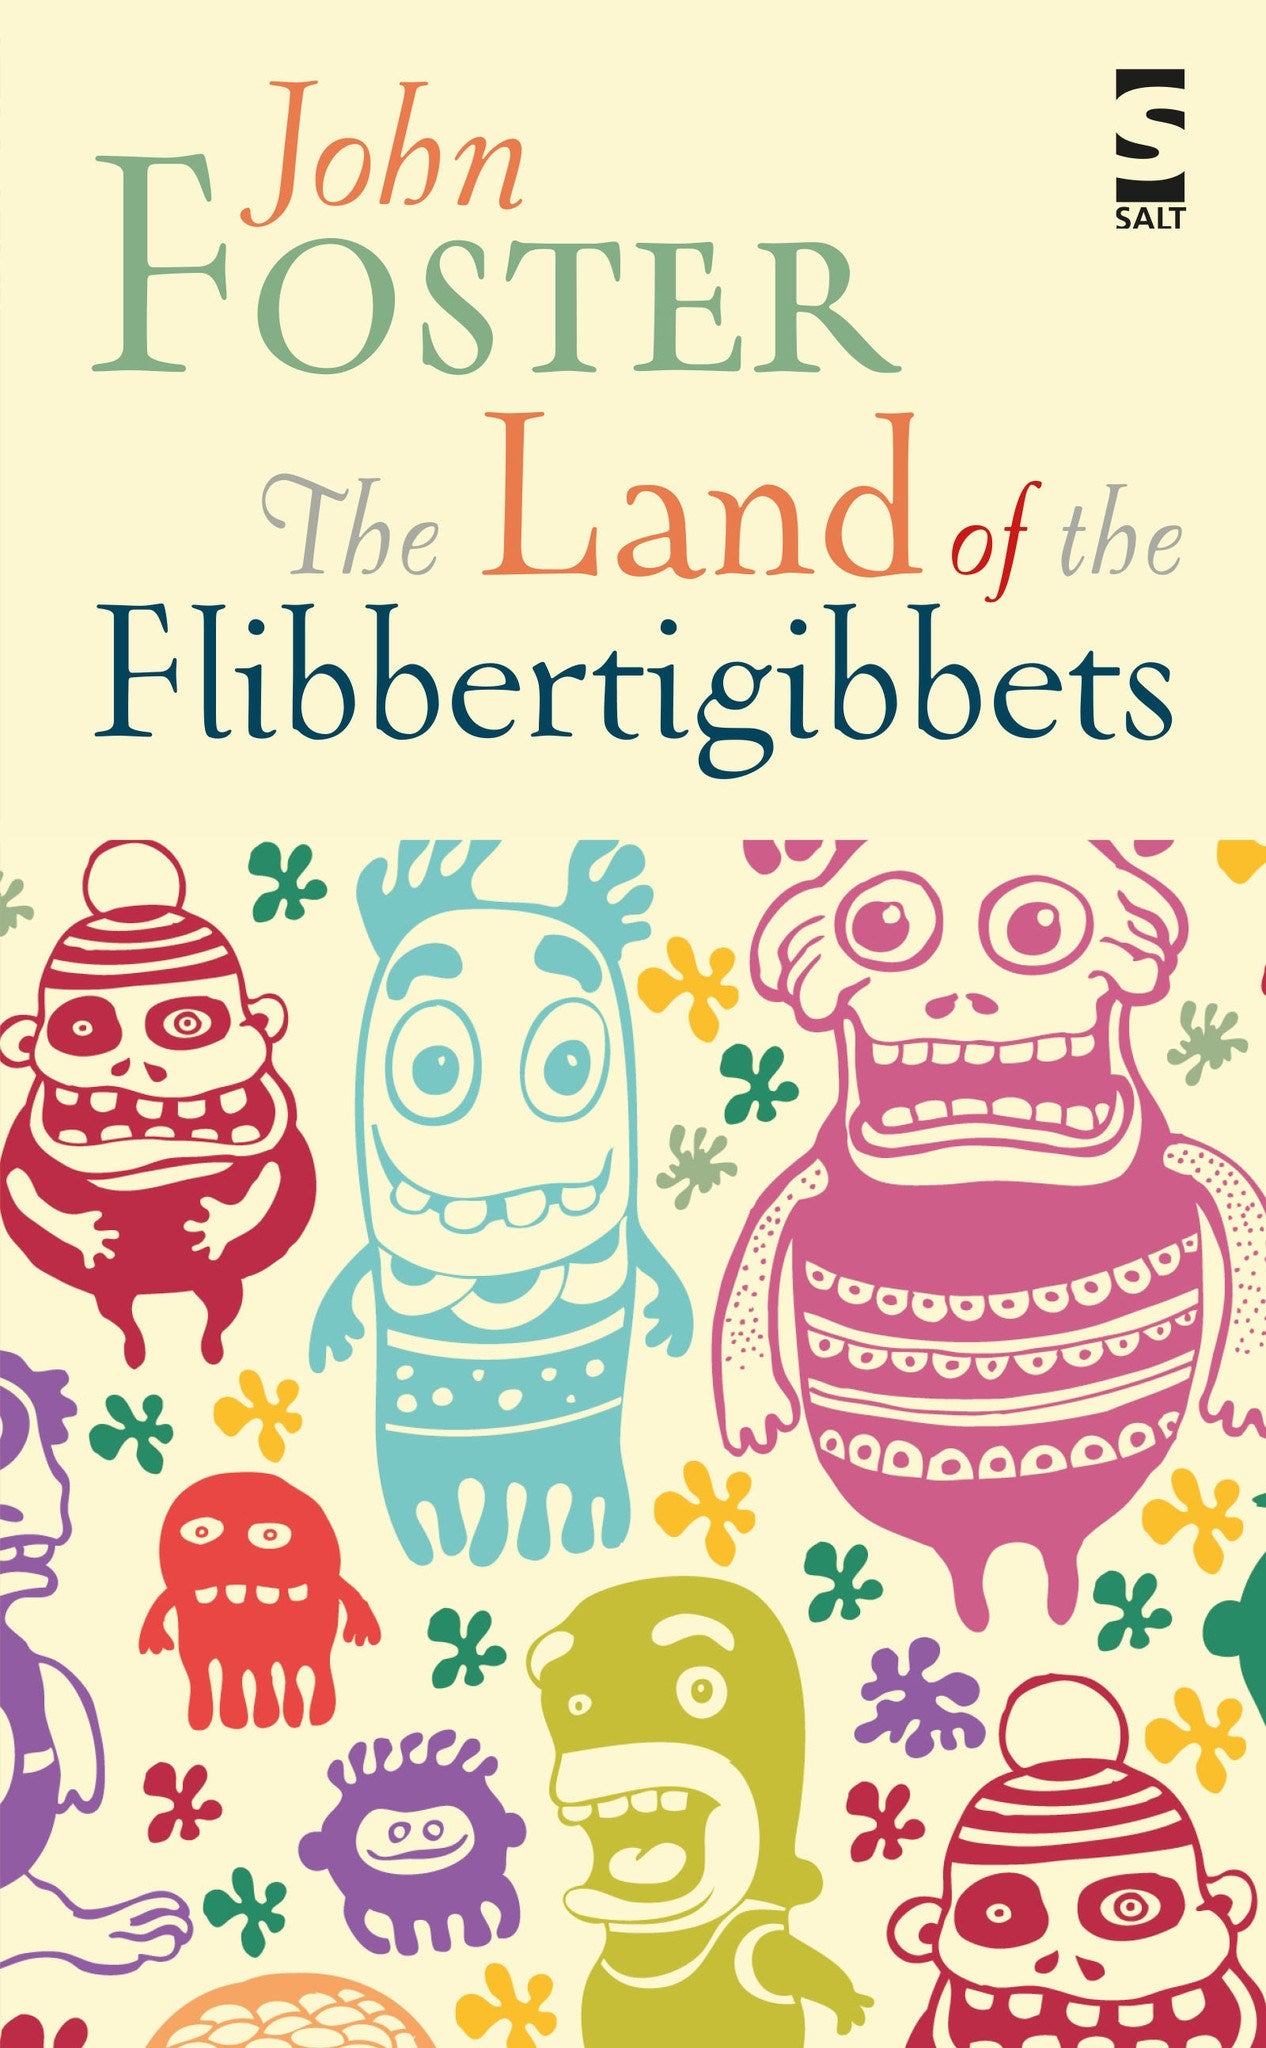 The Land of the Flibbertigibbets - Salt